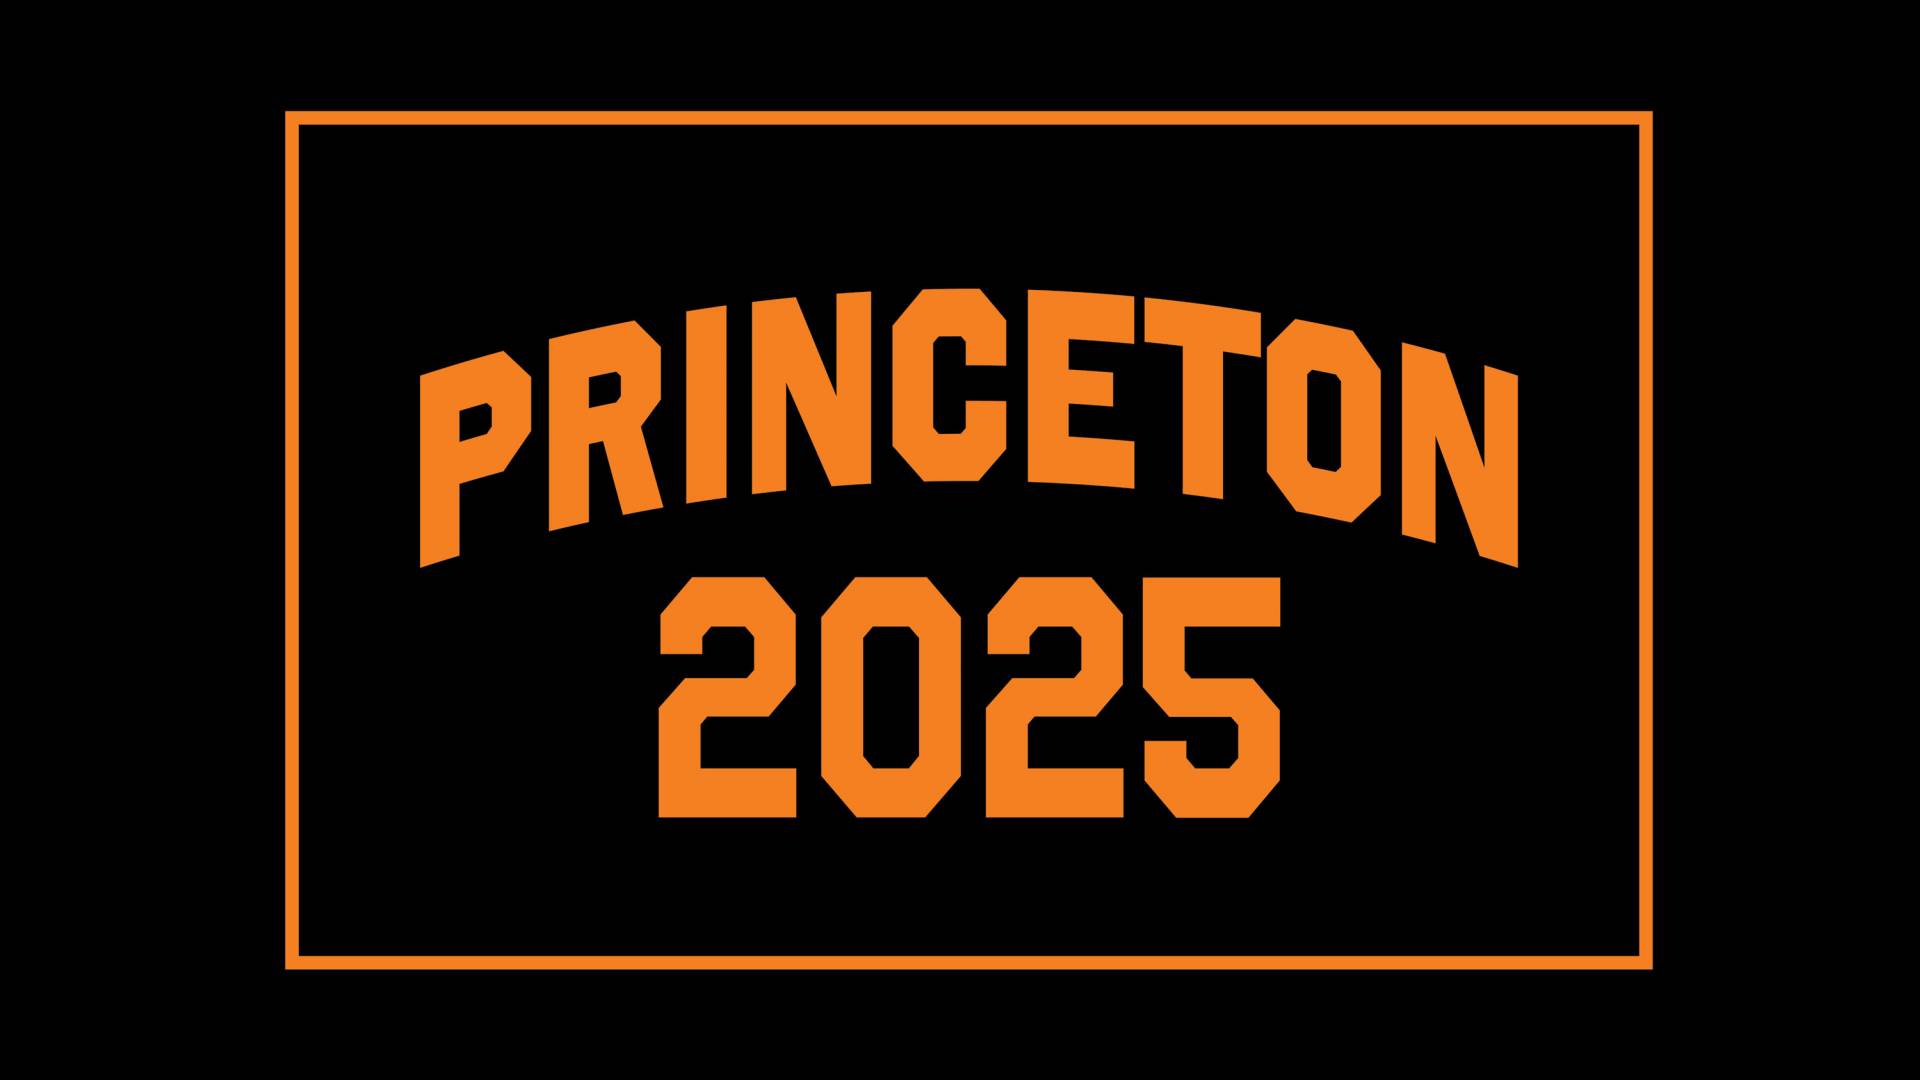 Princeton 2025